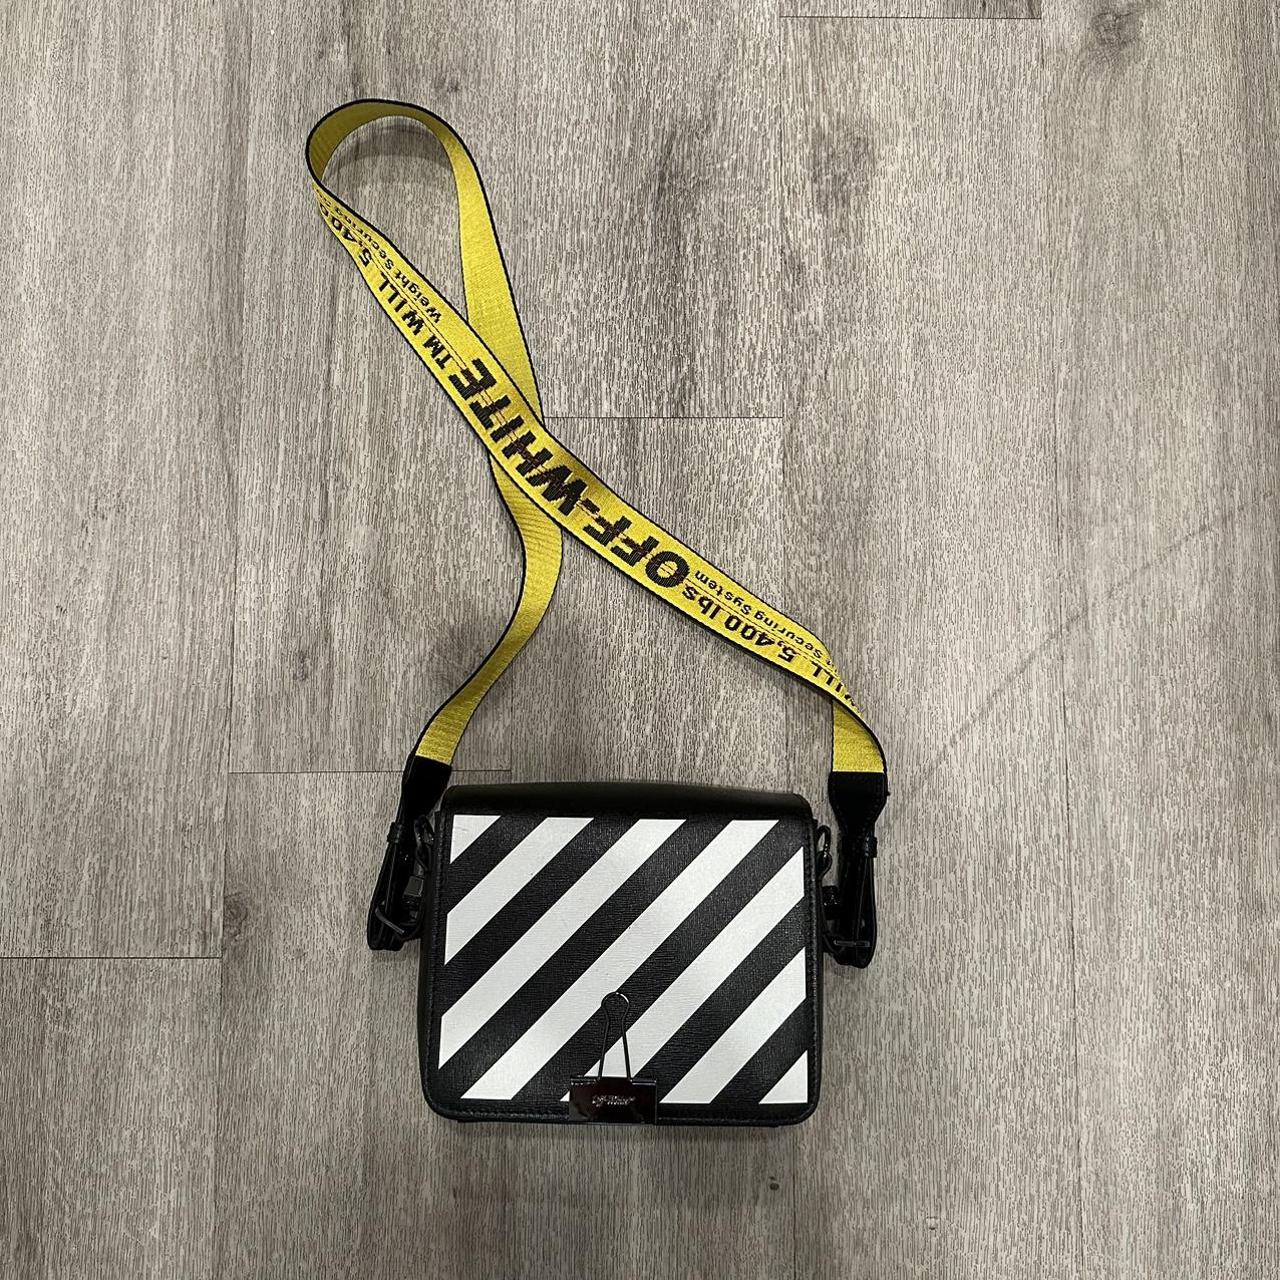 Off-White Black Diagonal Binder Clip Bag with Yellow - Depop